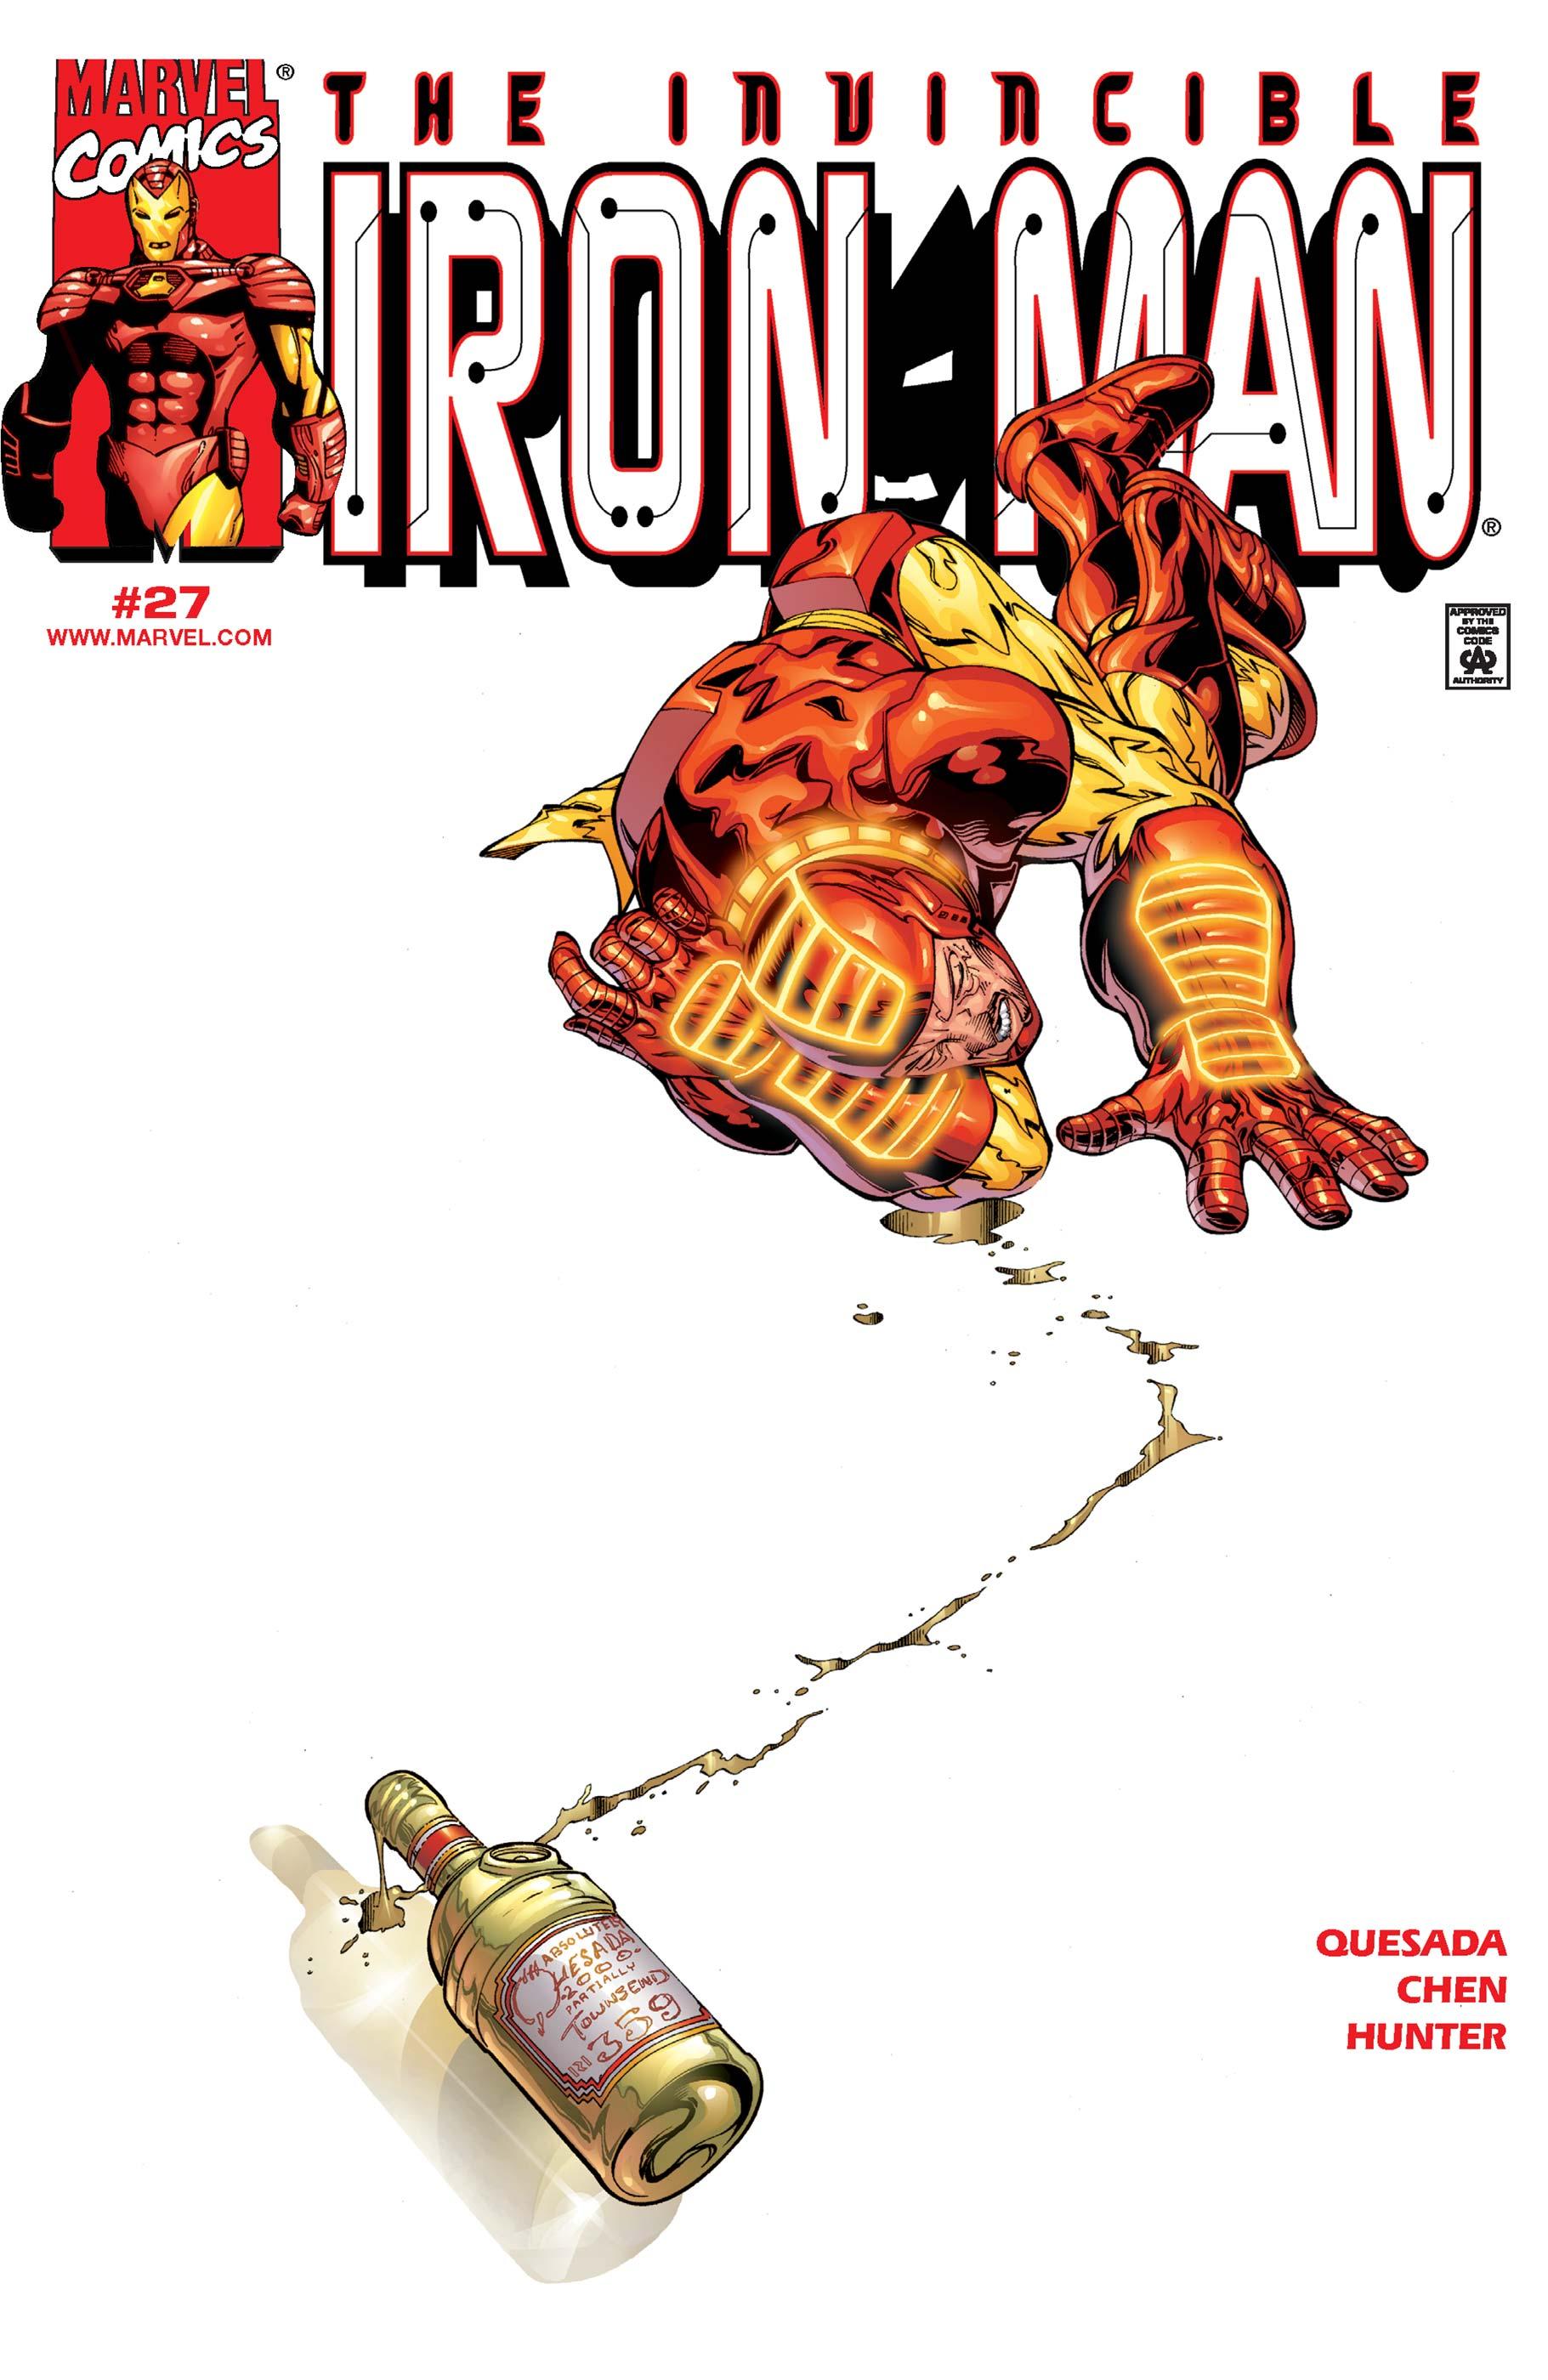 IRON MAN #27#28#29#30 - MARVEL COMICS (2000)